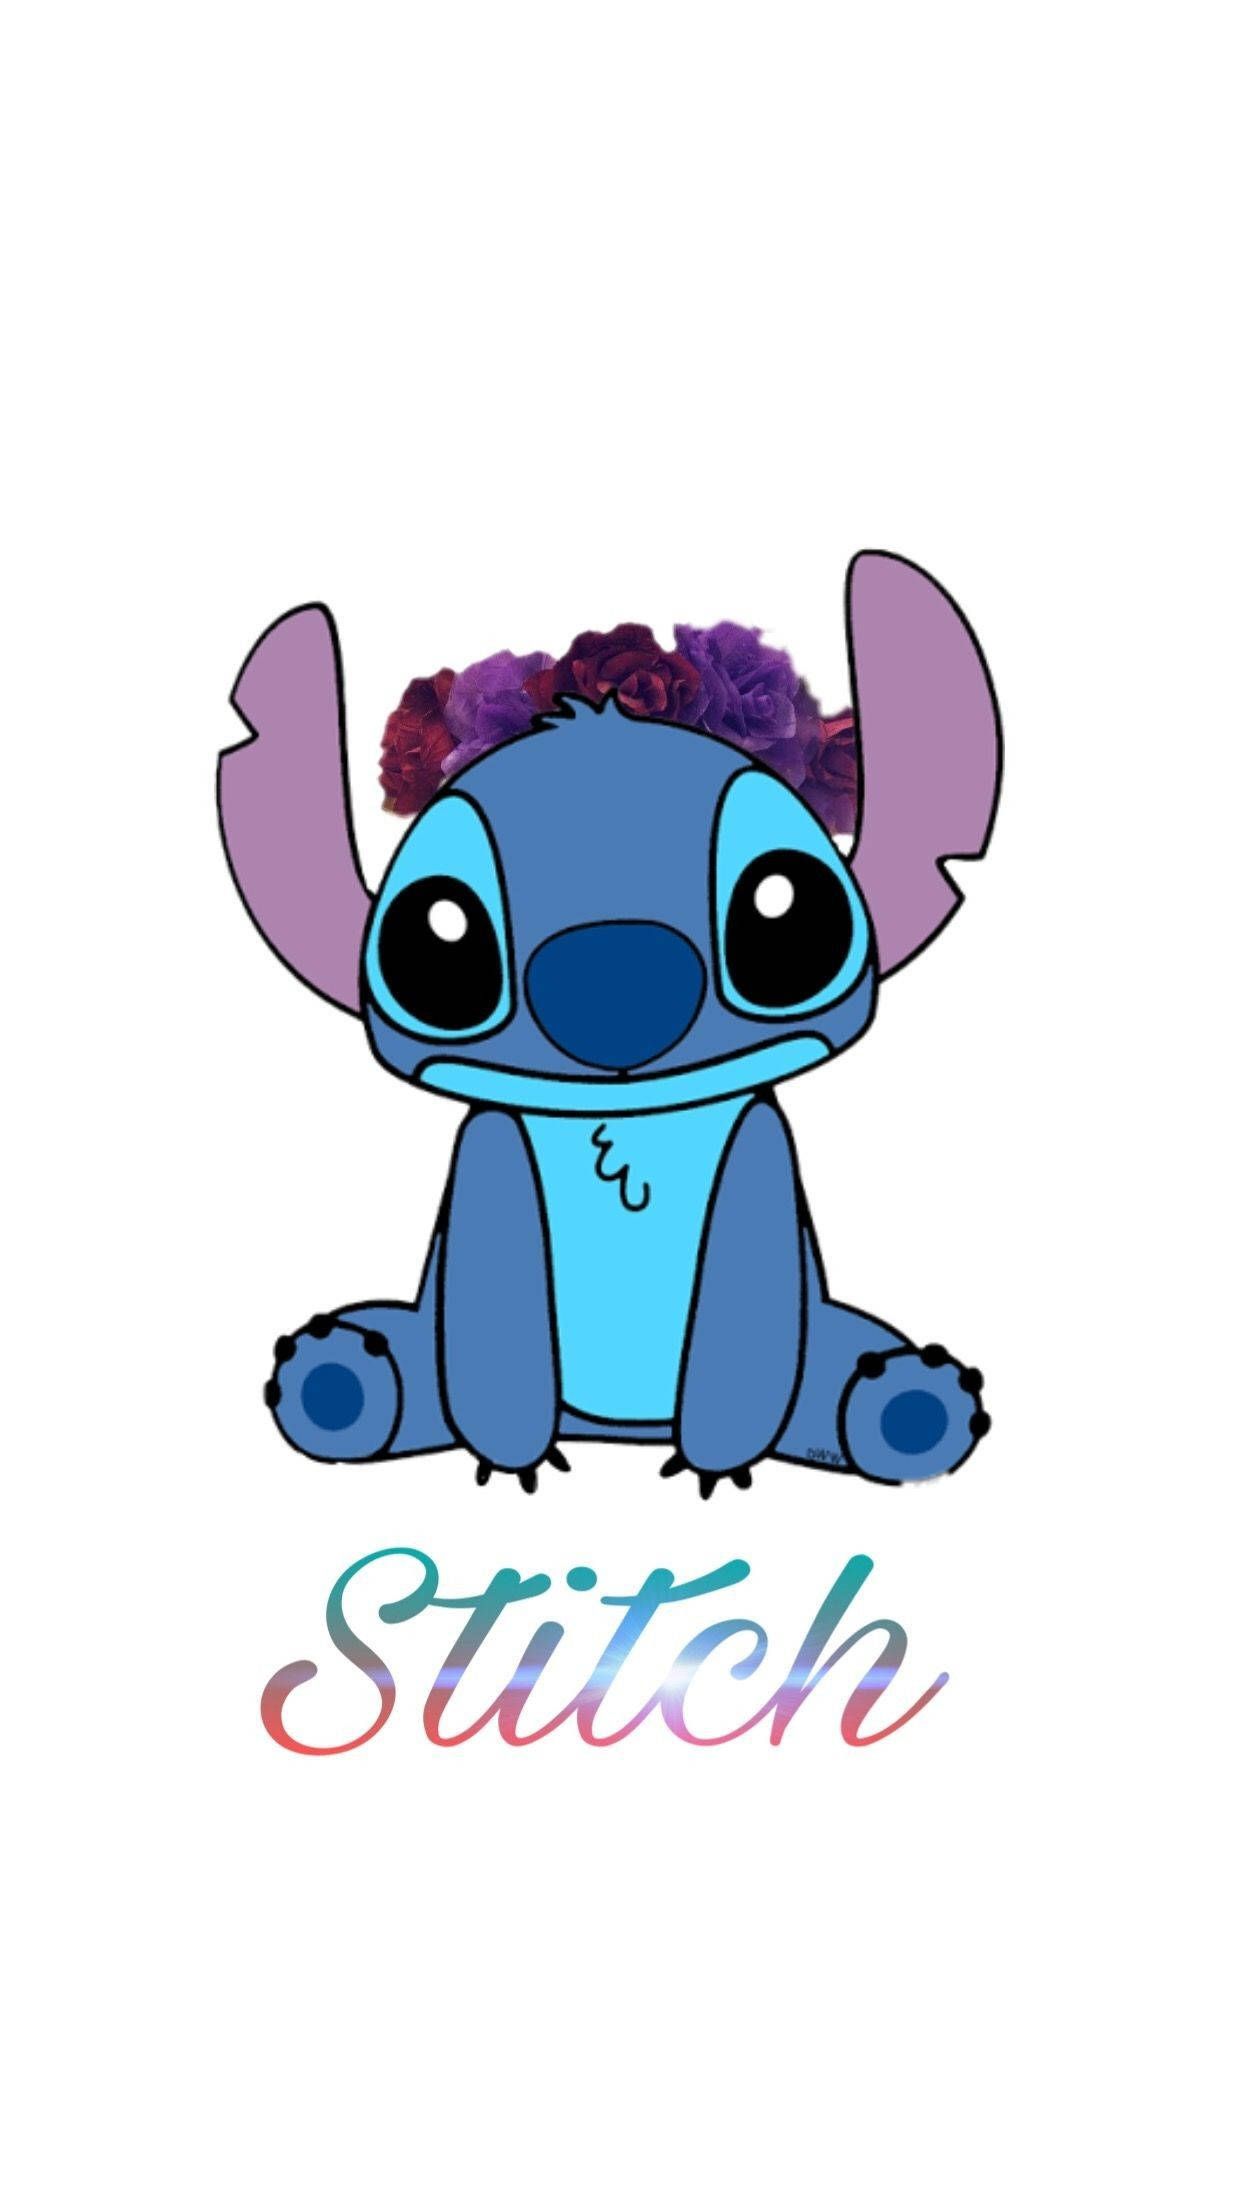 Free Stitch Wallpaper Downloads, Stitch Wallpaper for FREE